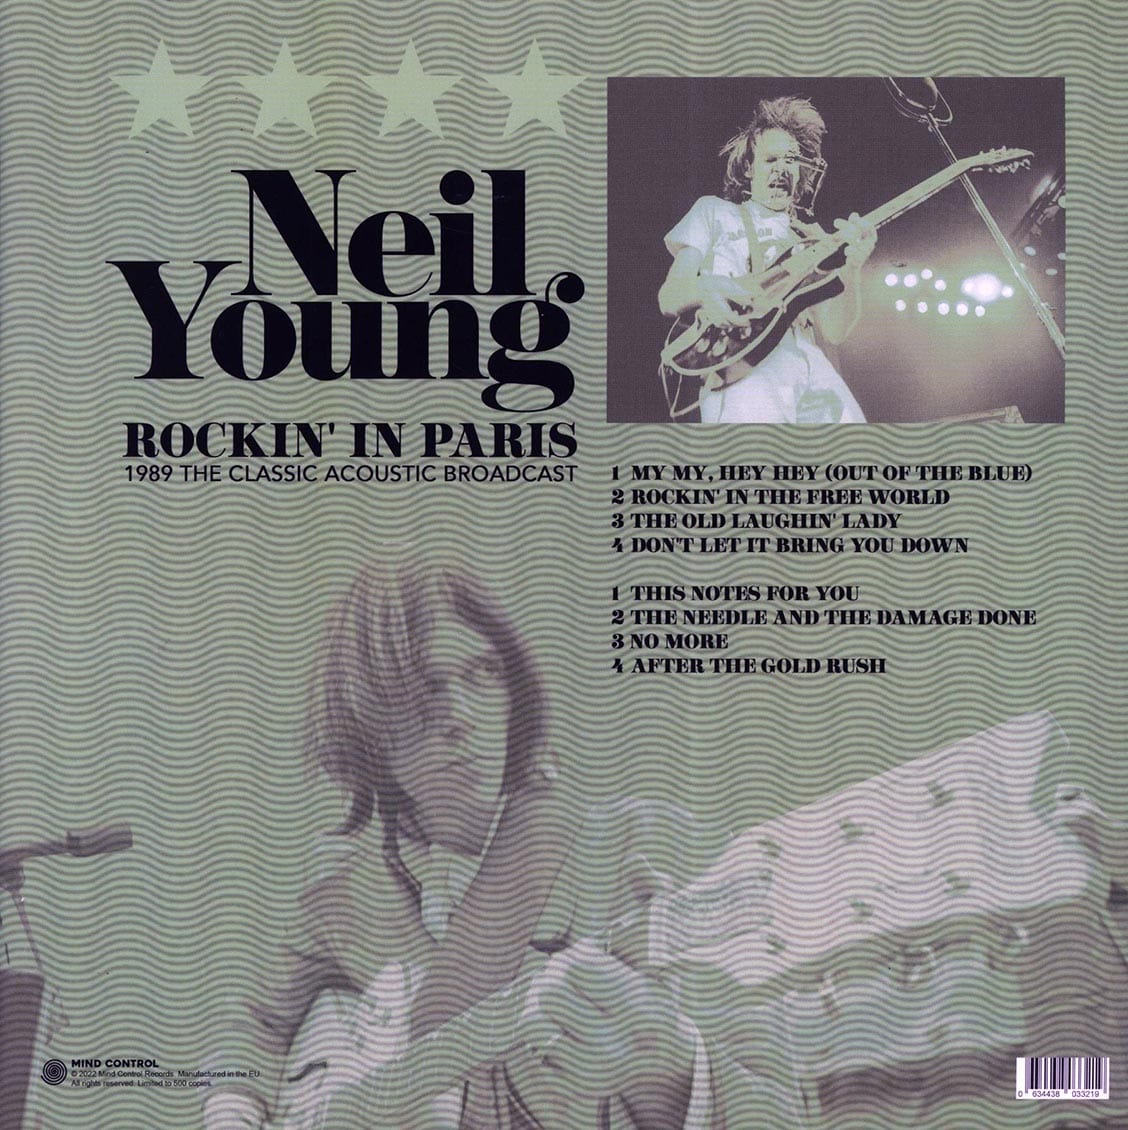 NEIL YOUNG: Rockin' In Paris - 1989 The Classic Acoustic Broadcast (Ltd. 500 Copies on green vinyl) LP